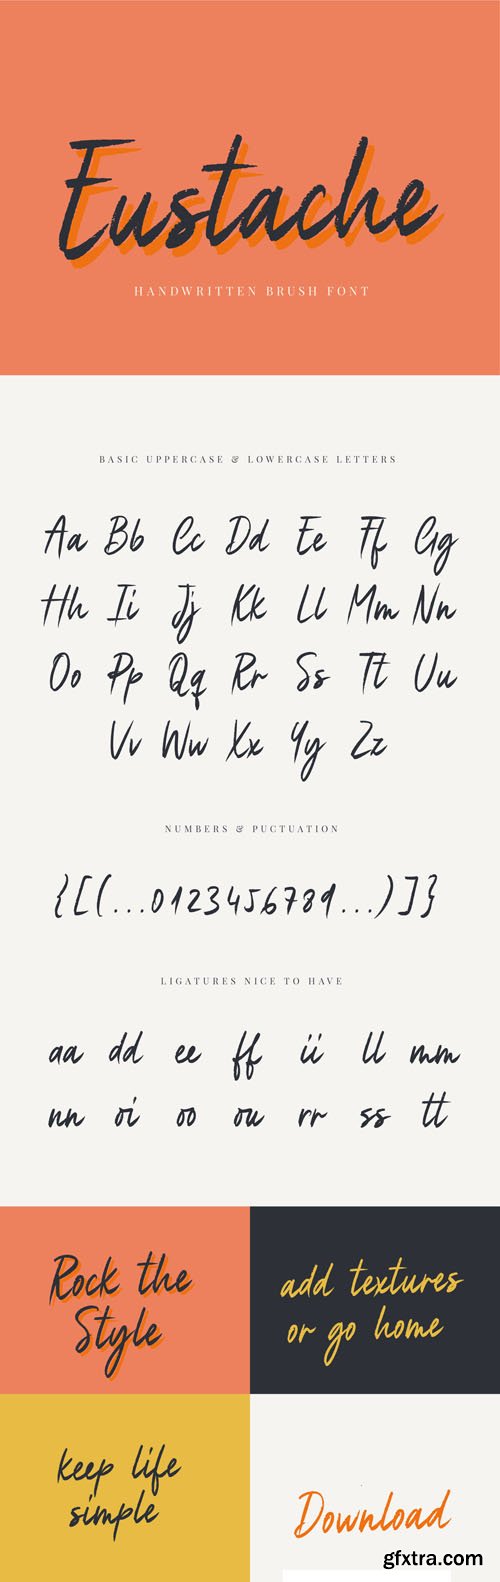 Eustache Handwritten Brush Font